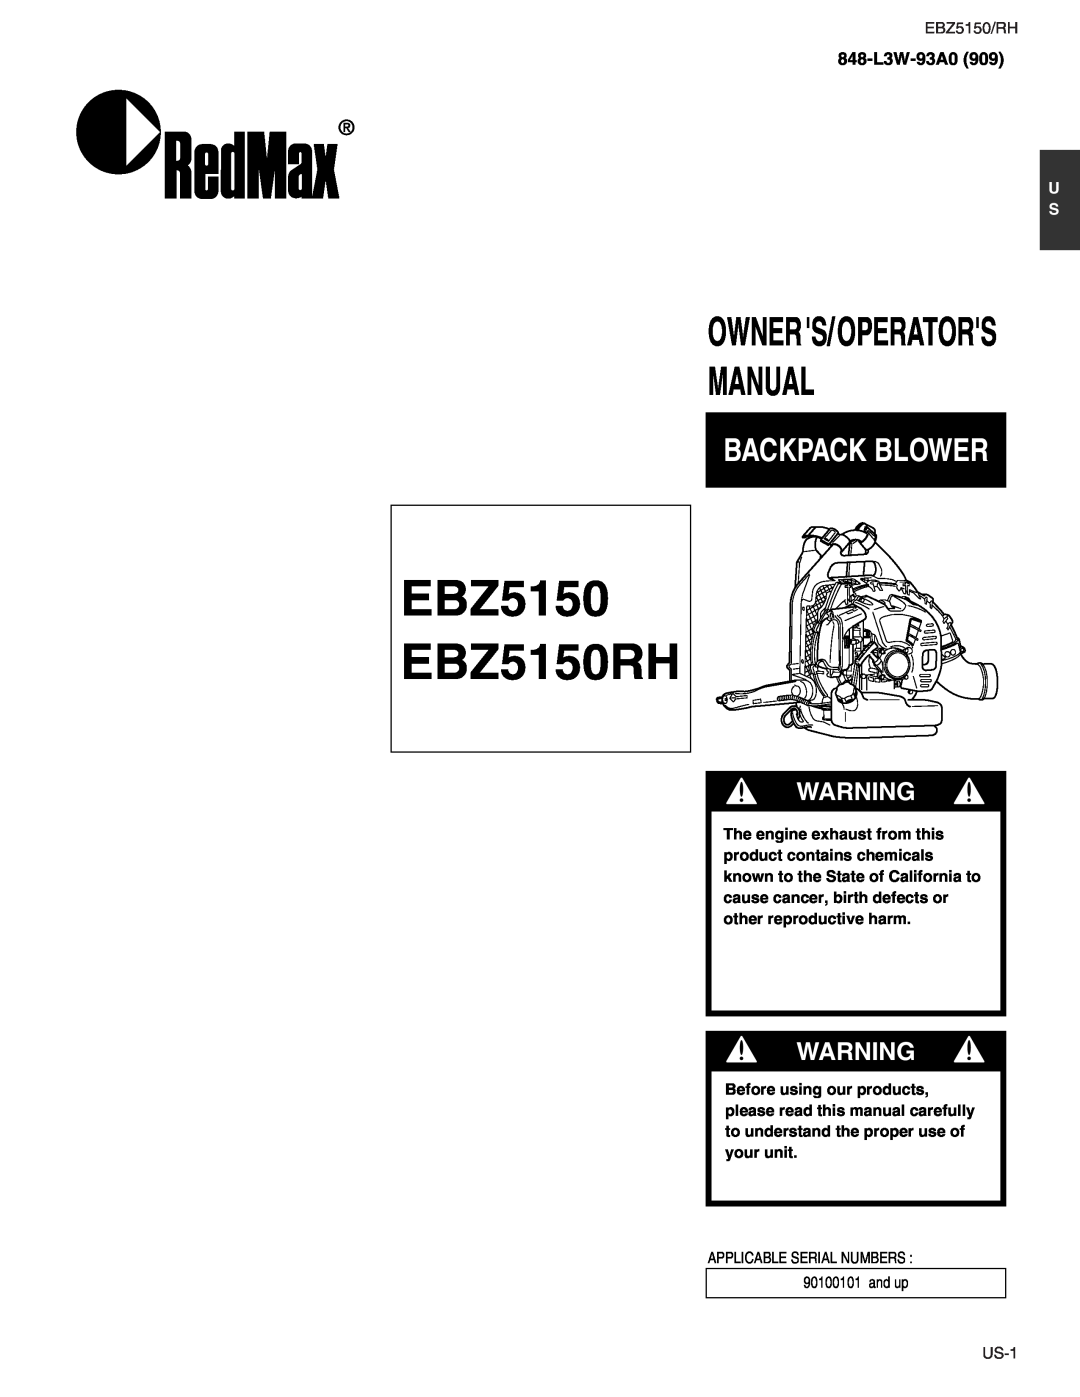 RedMax manual 848-L3W-93A0, EBZ5150 EBZ5150RH, Manual, Owners/Operators, Backpack Blower 